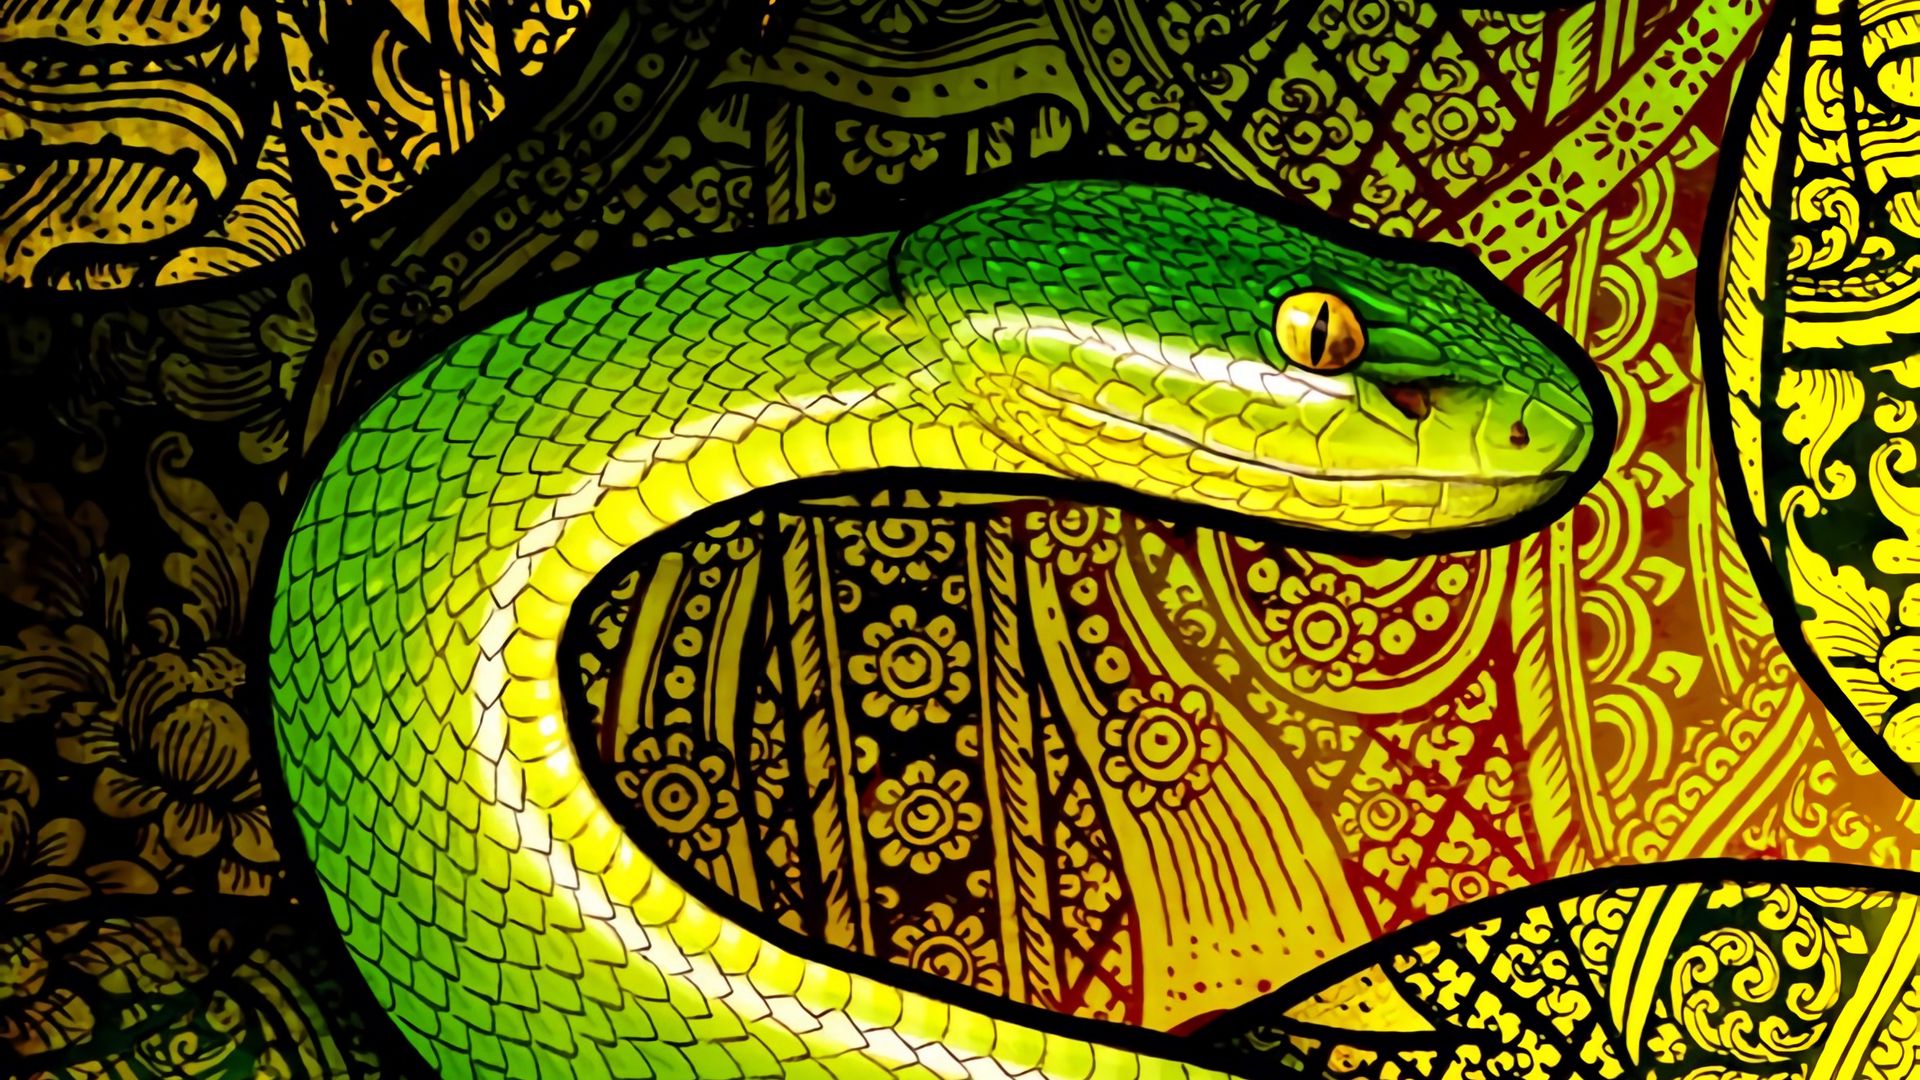 Download wallpaper 1920x1080 snake, reptile, pattern, art full hd, hdtv,  fhd, 1080p hd background